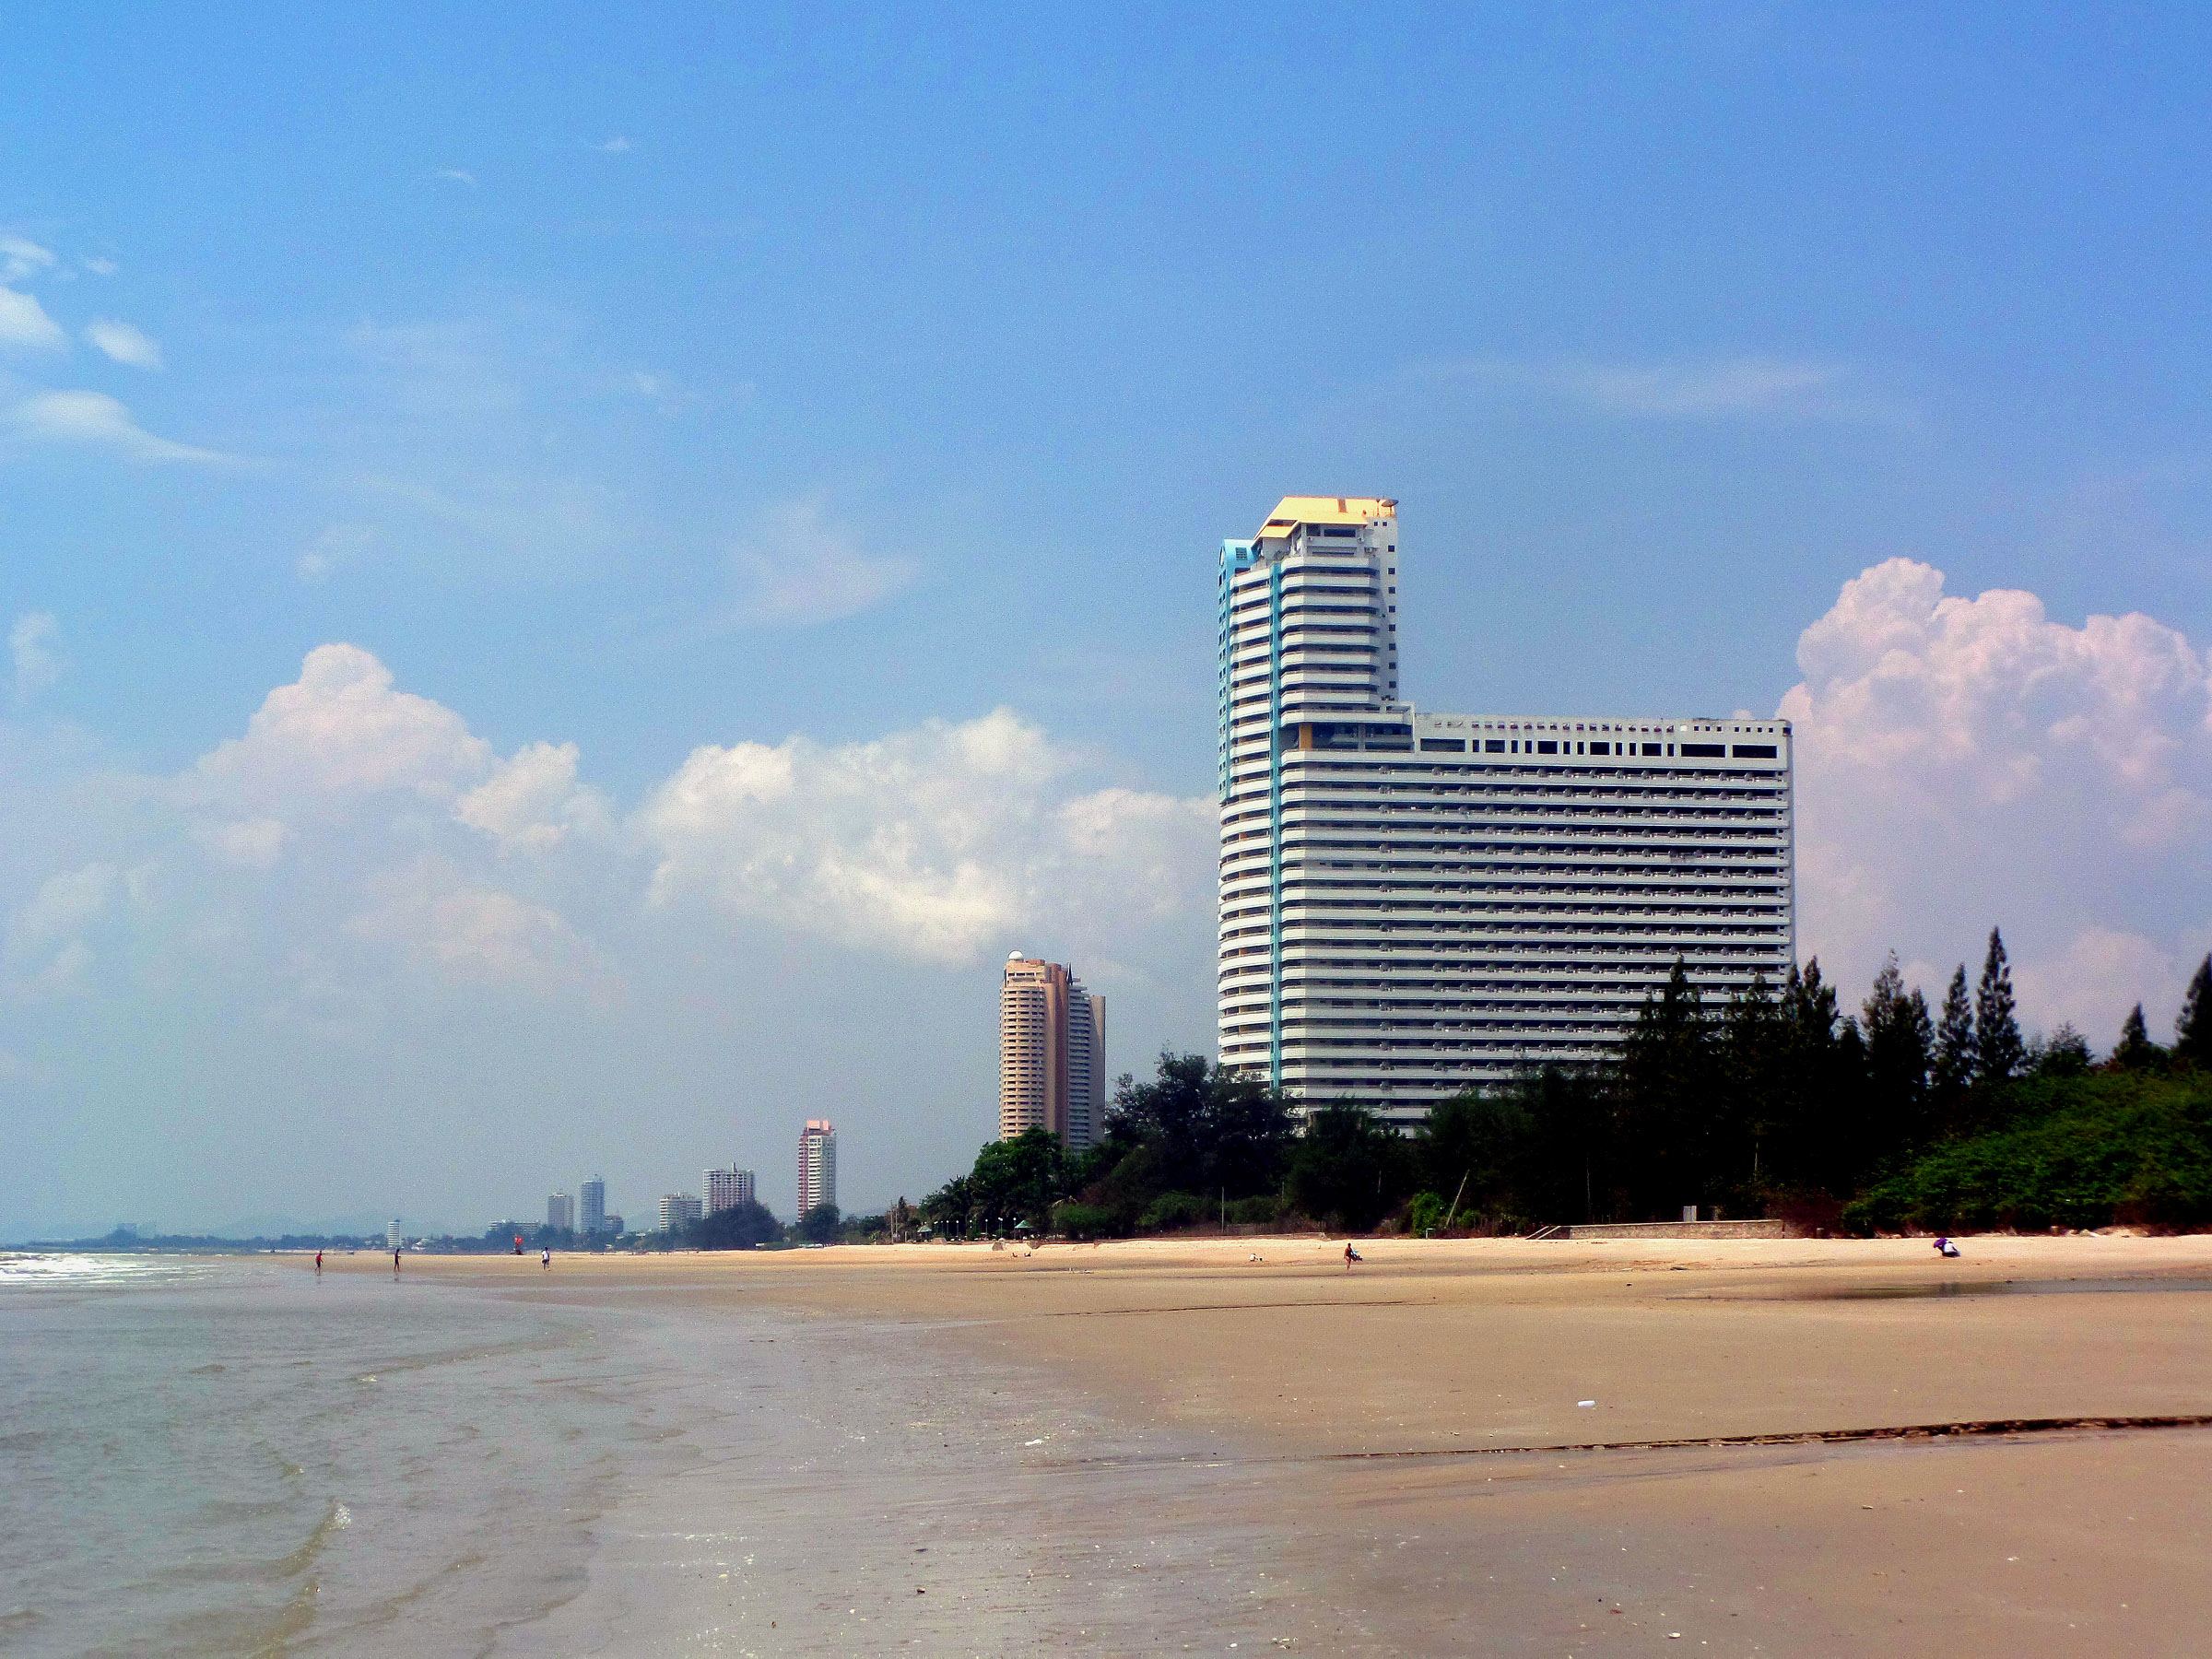 Quiet beach scene at cha am, thailand photo